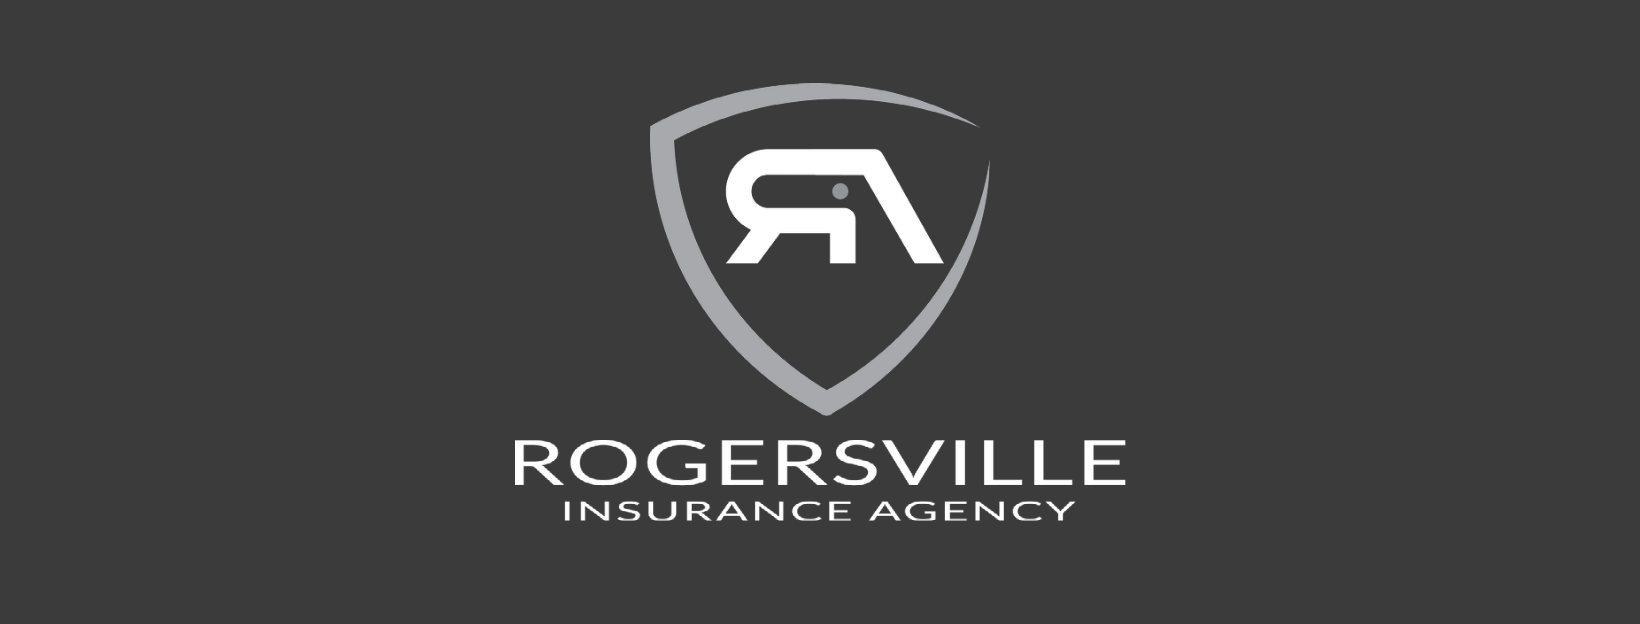 Rogersville Insurance Agency 129 Johnstown Dr, Rogersville Missouri 65742